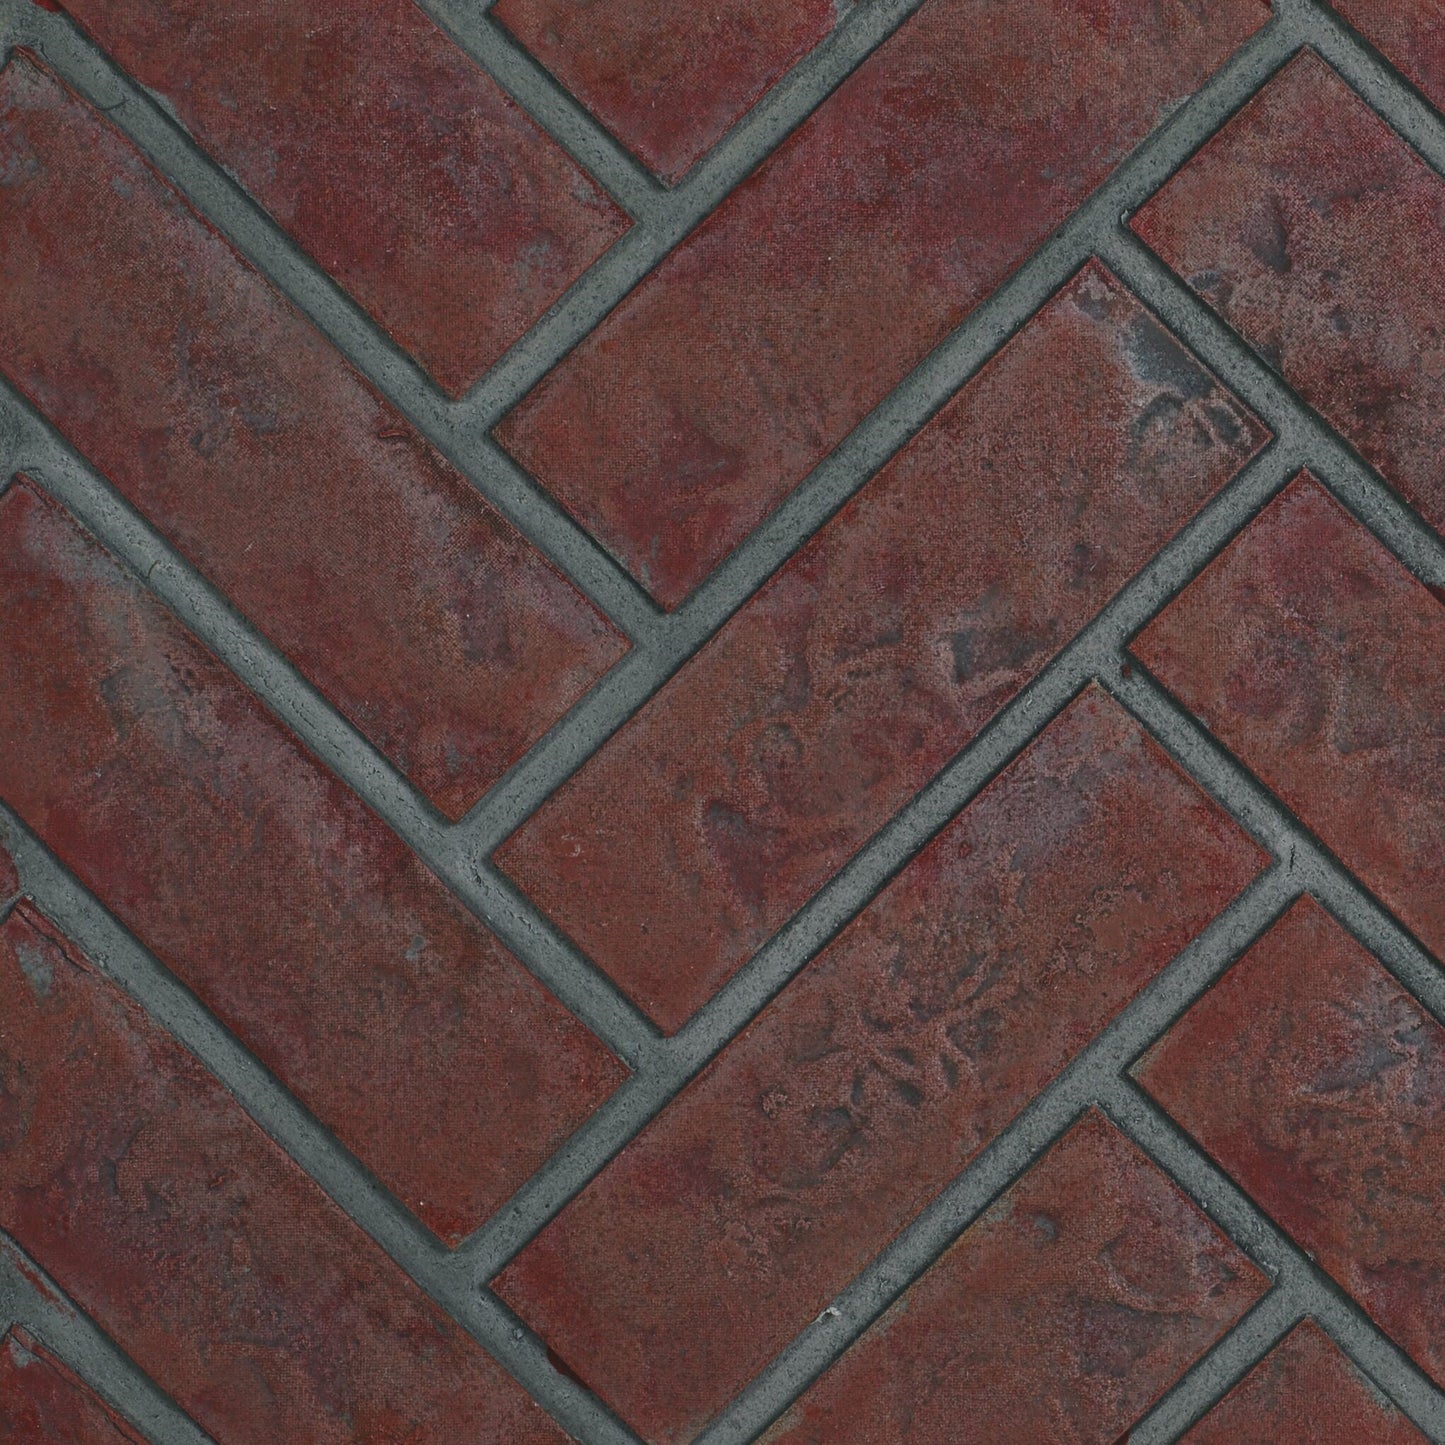 Napoleon Decorative Brick Panels Old Town Red Herringbone - DBPEX36OH